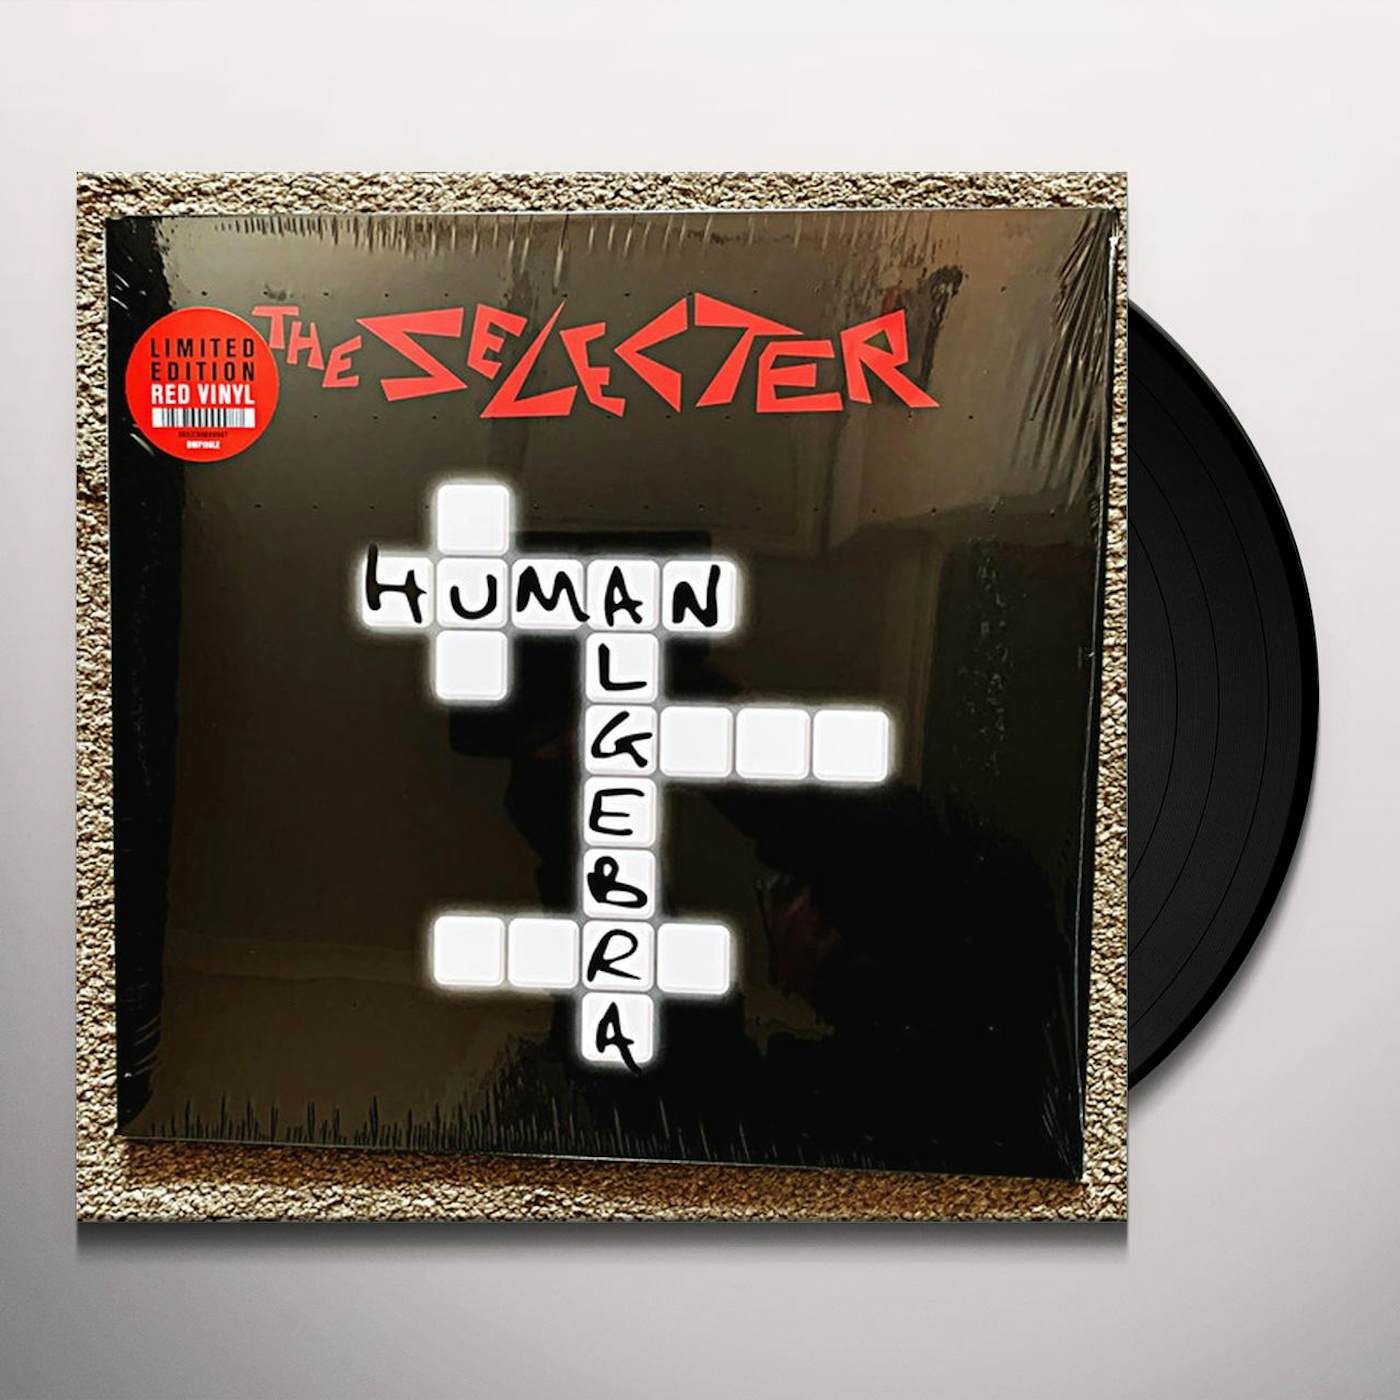 The Selecter Human Algebra Vinyl Record